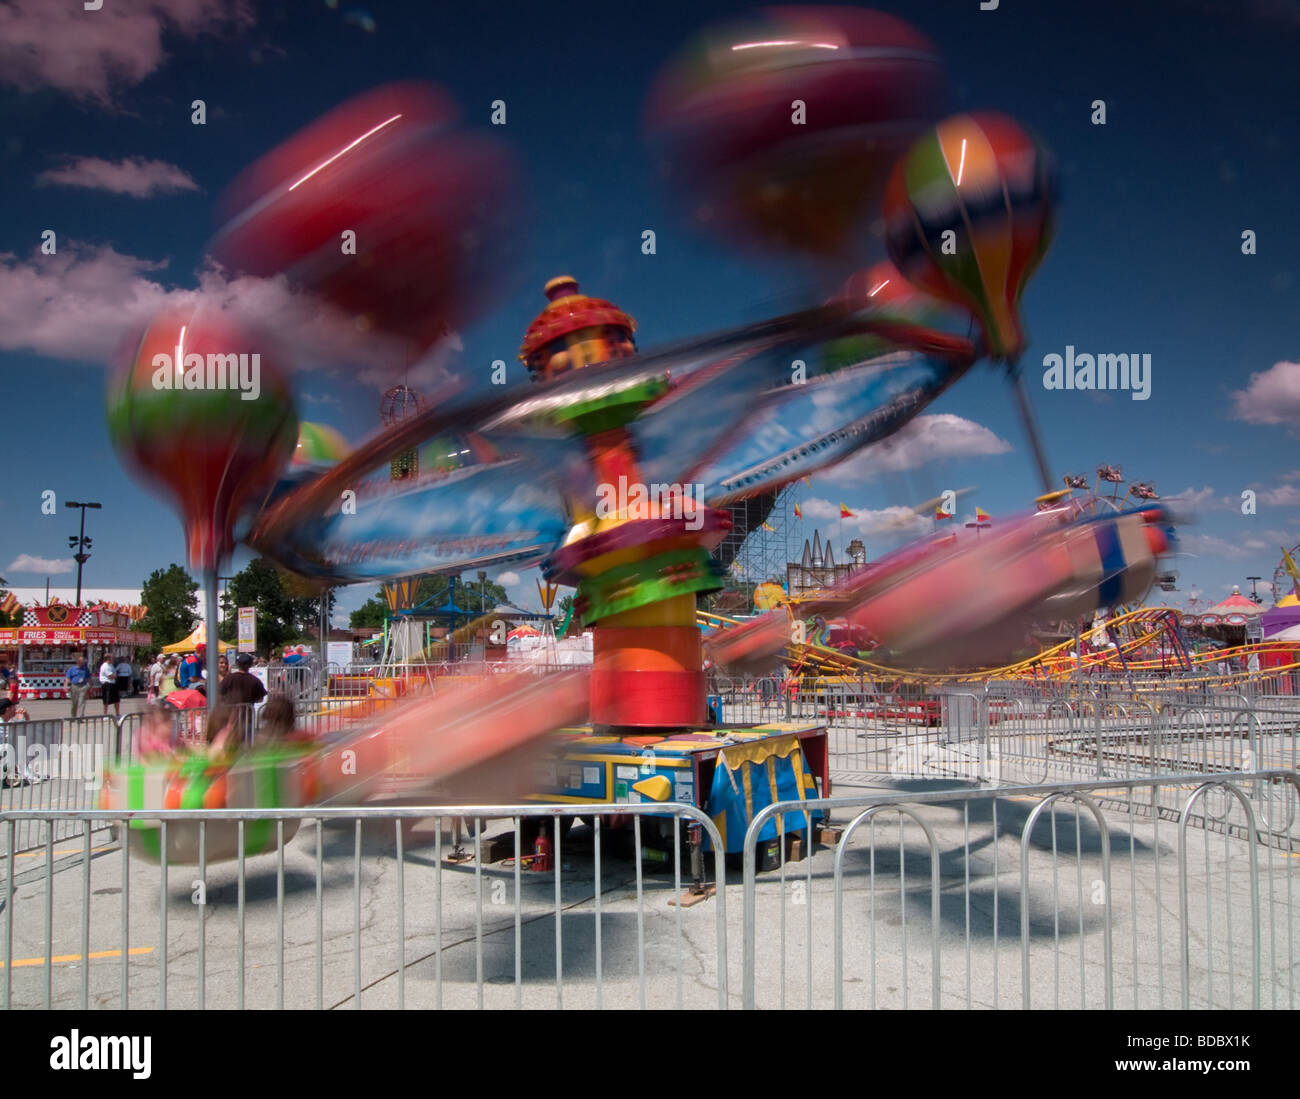 Ohio State Fair amusement ride in motion Stock Photo